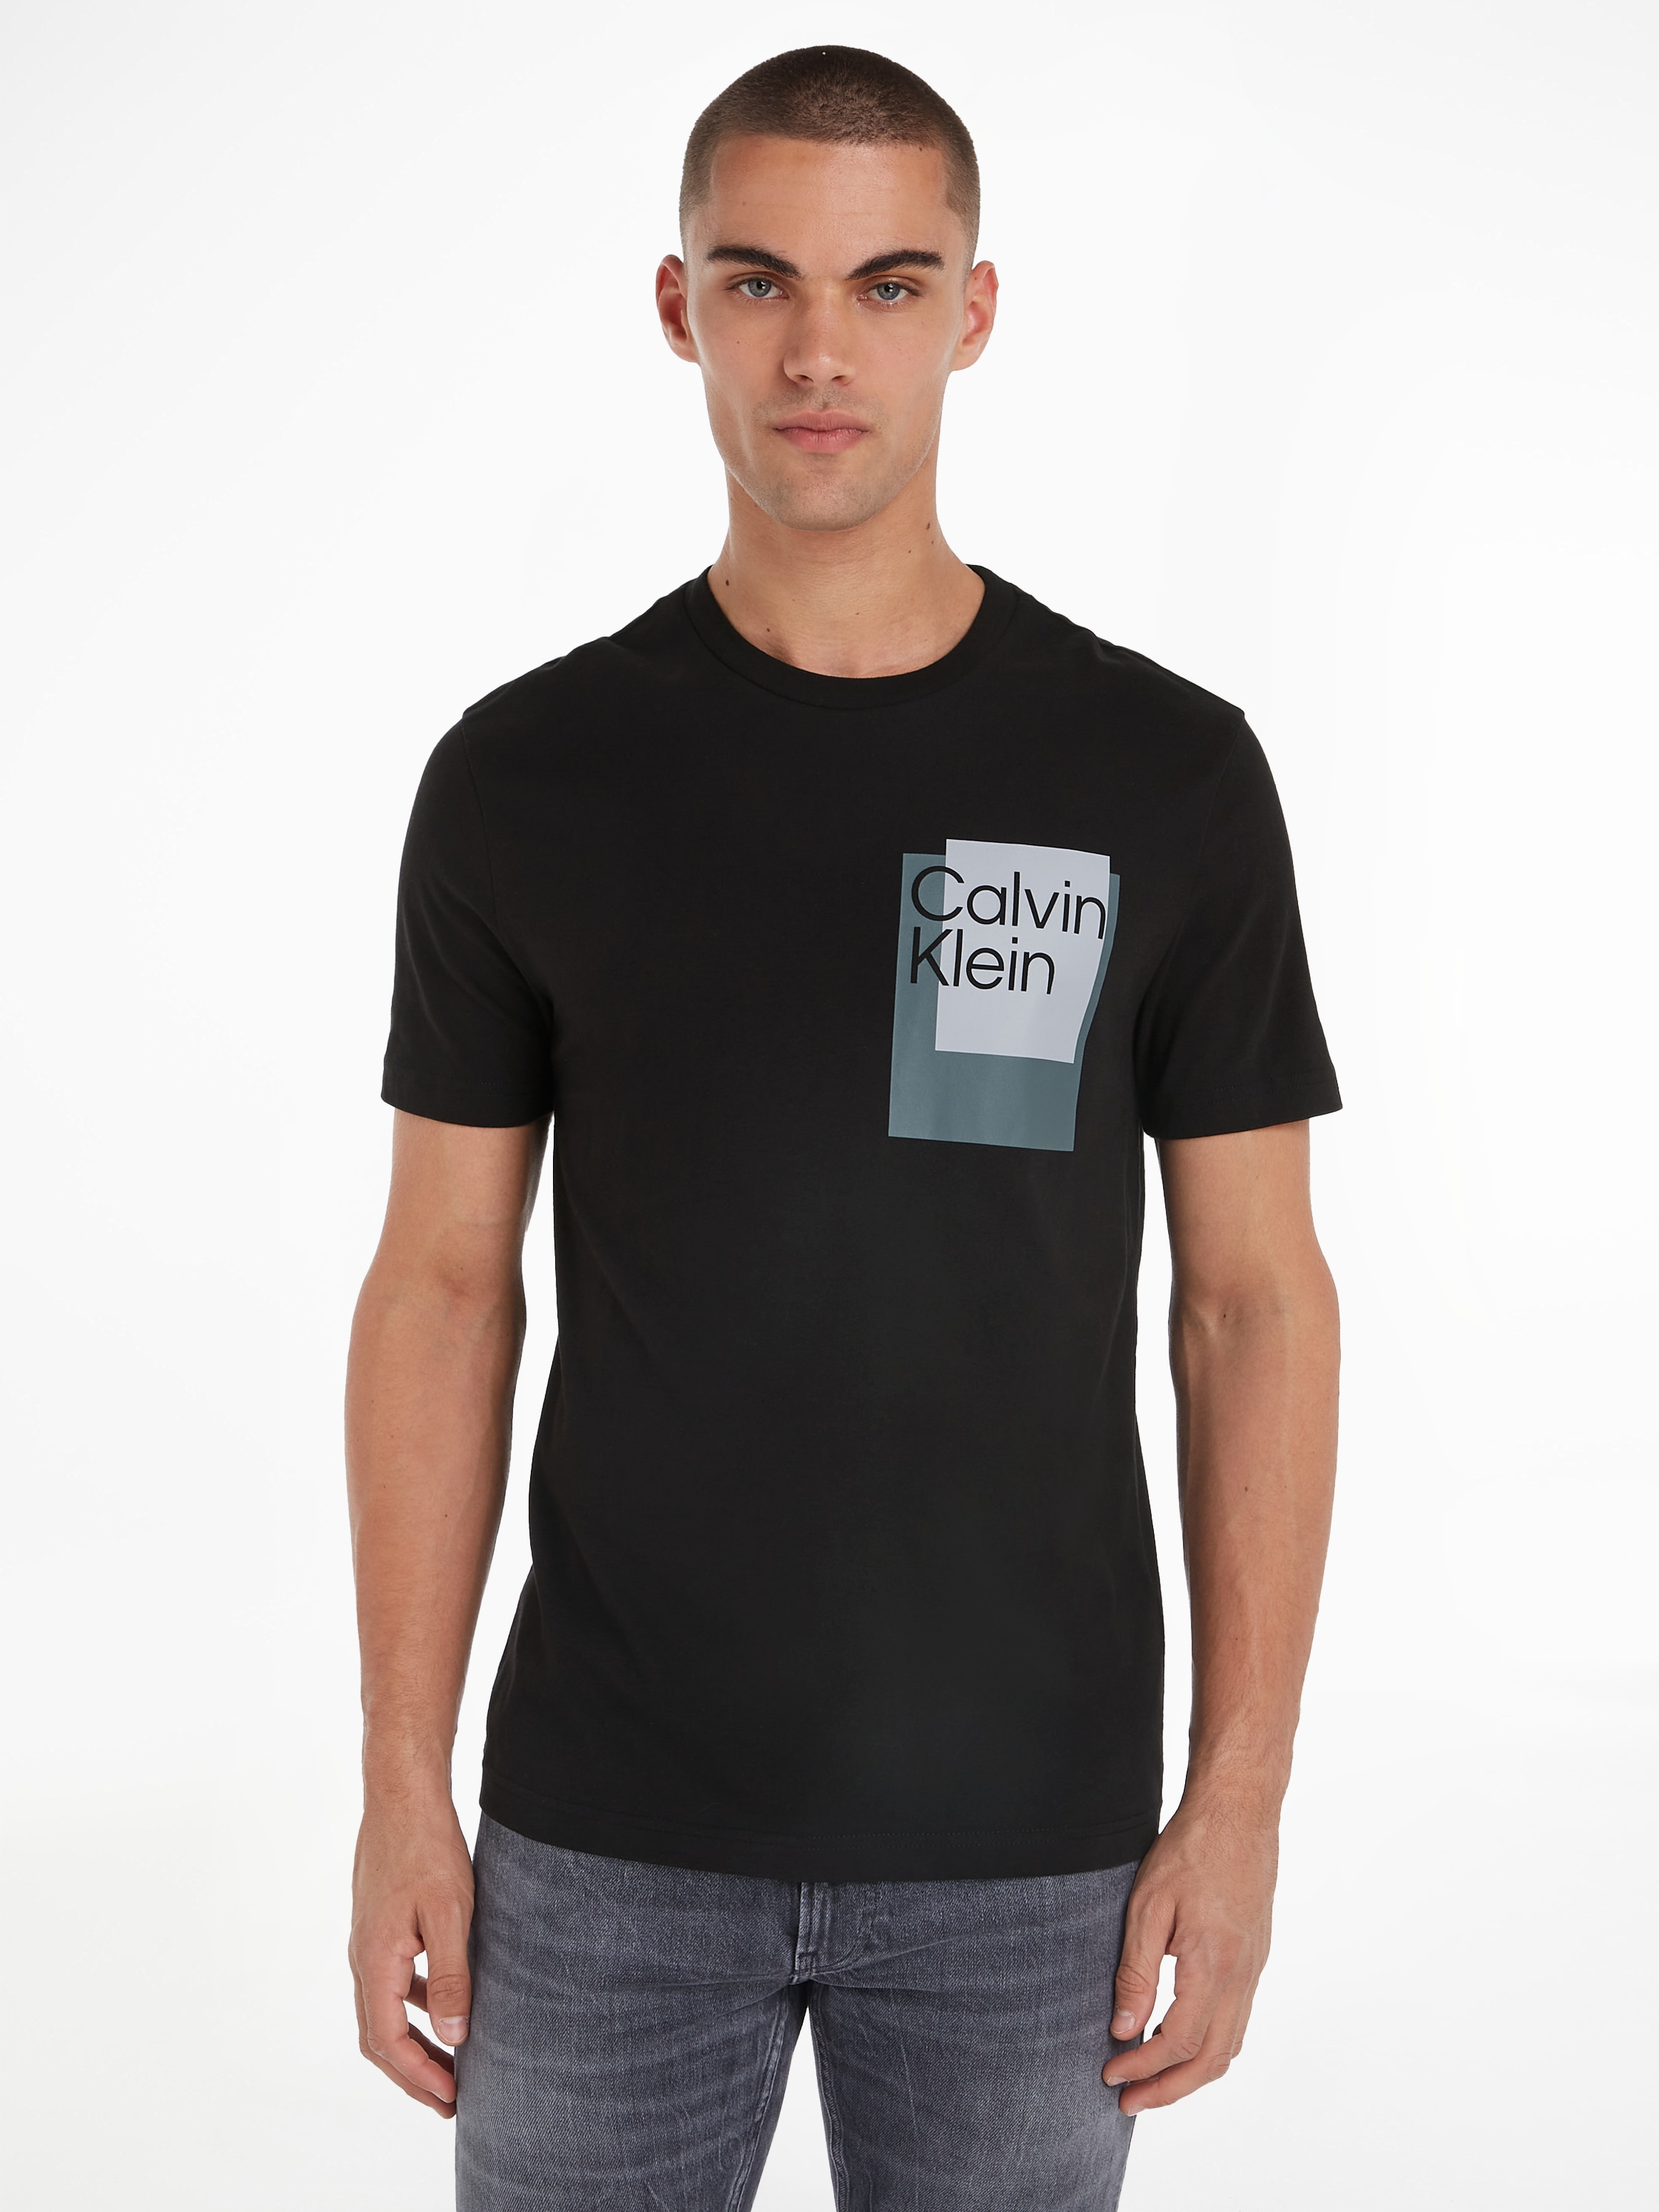 LOGO BAUR »OVERLAY T-SHIRT« Calvin Klein BOX ▷ | T-Shirt kaufen